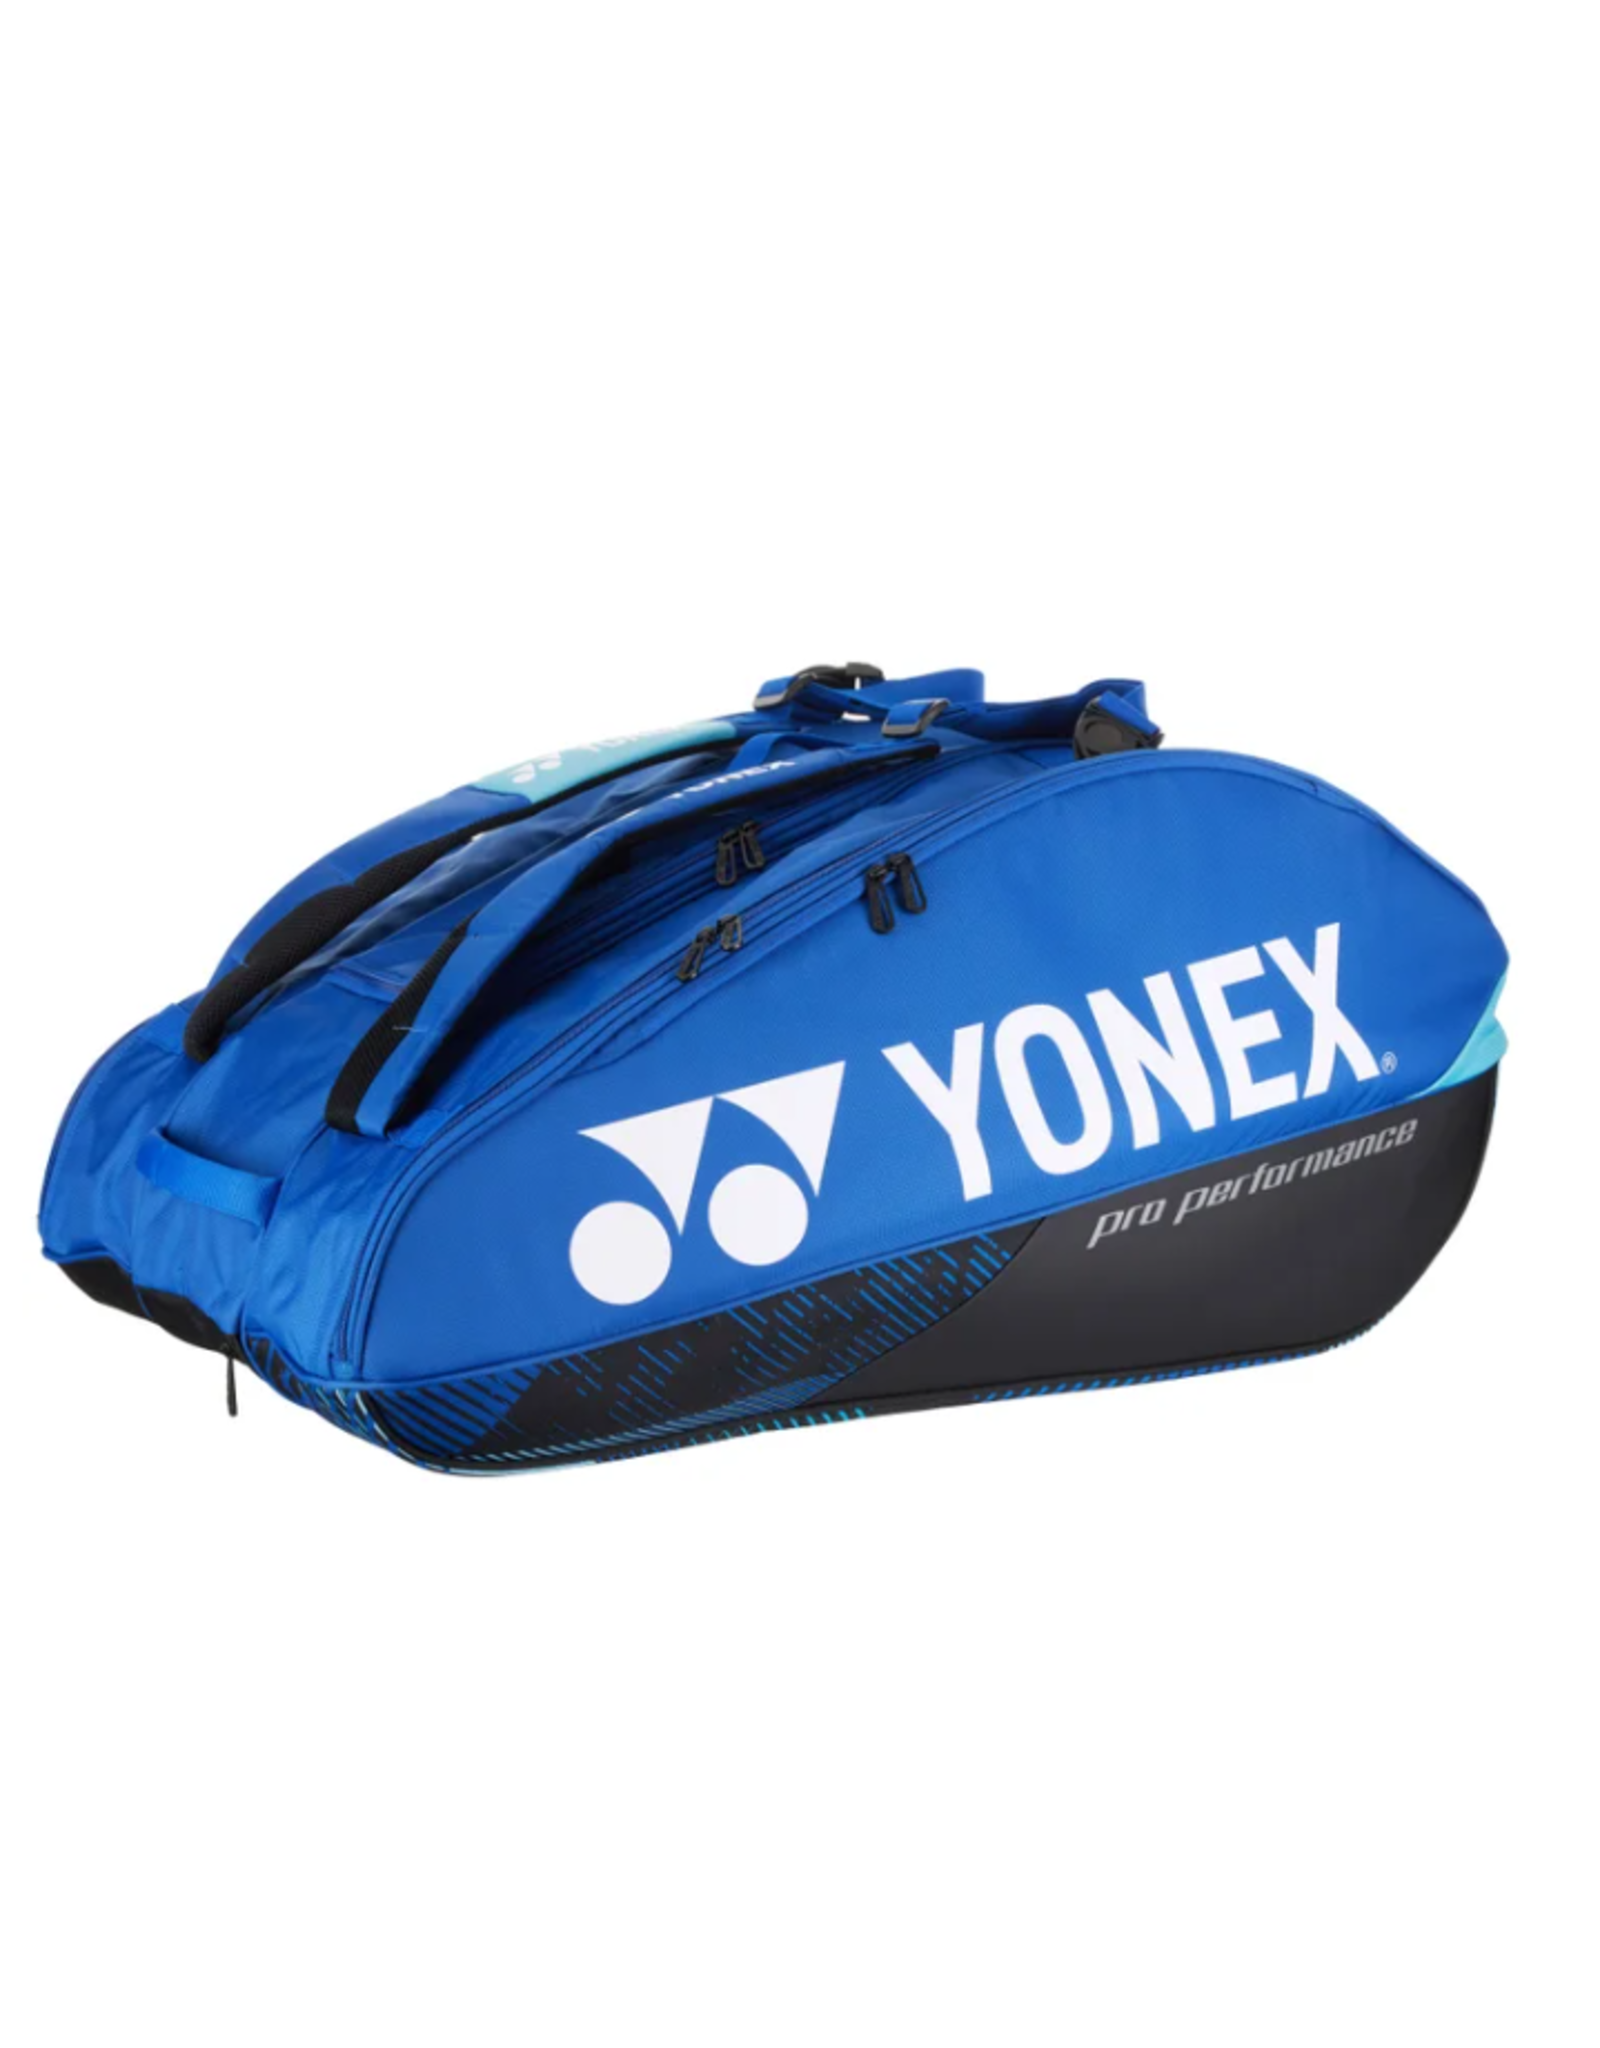 Yonex Yonex Pro Racquet Bag 6 (Cobalt/Blue) Tennis Bag